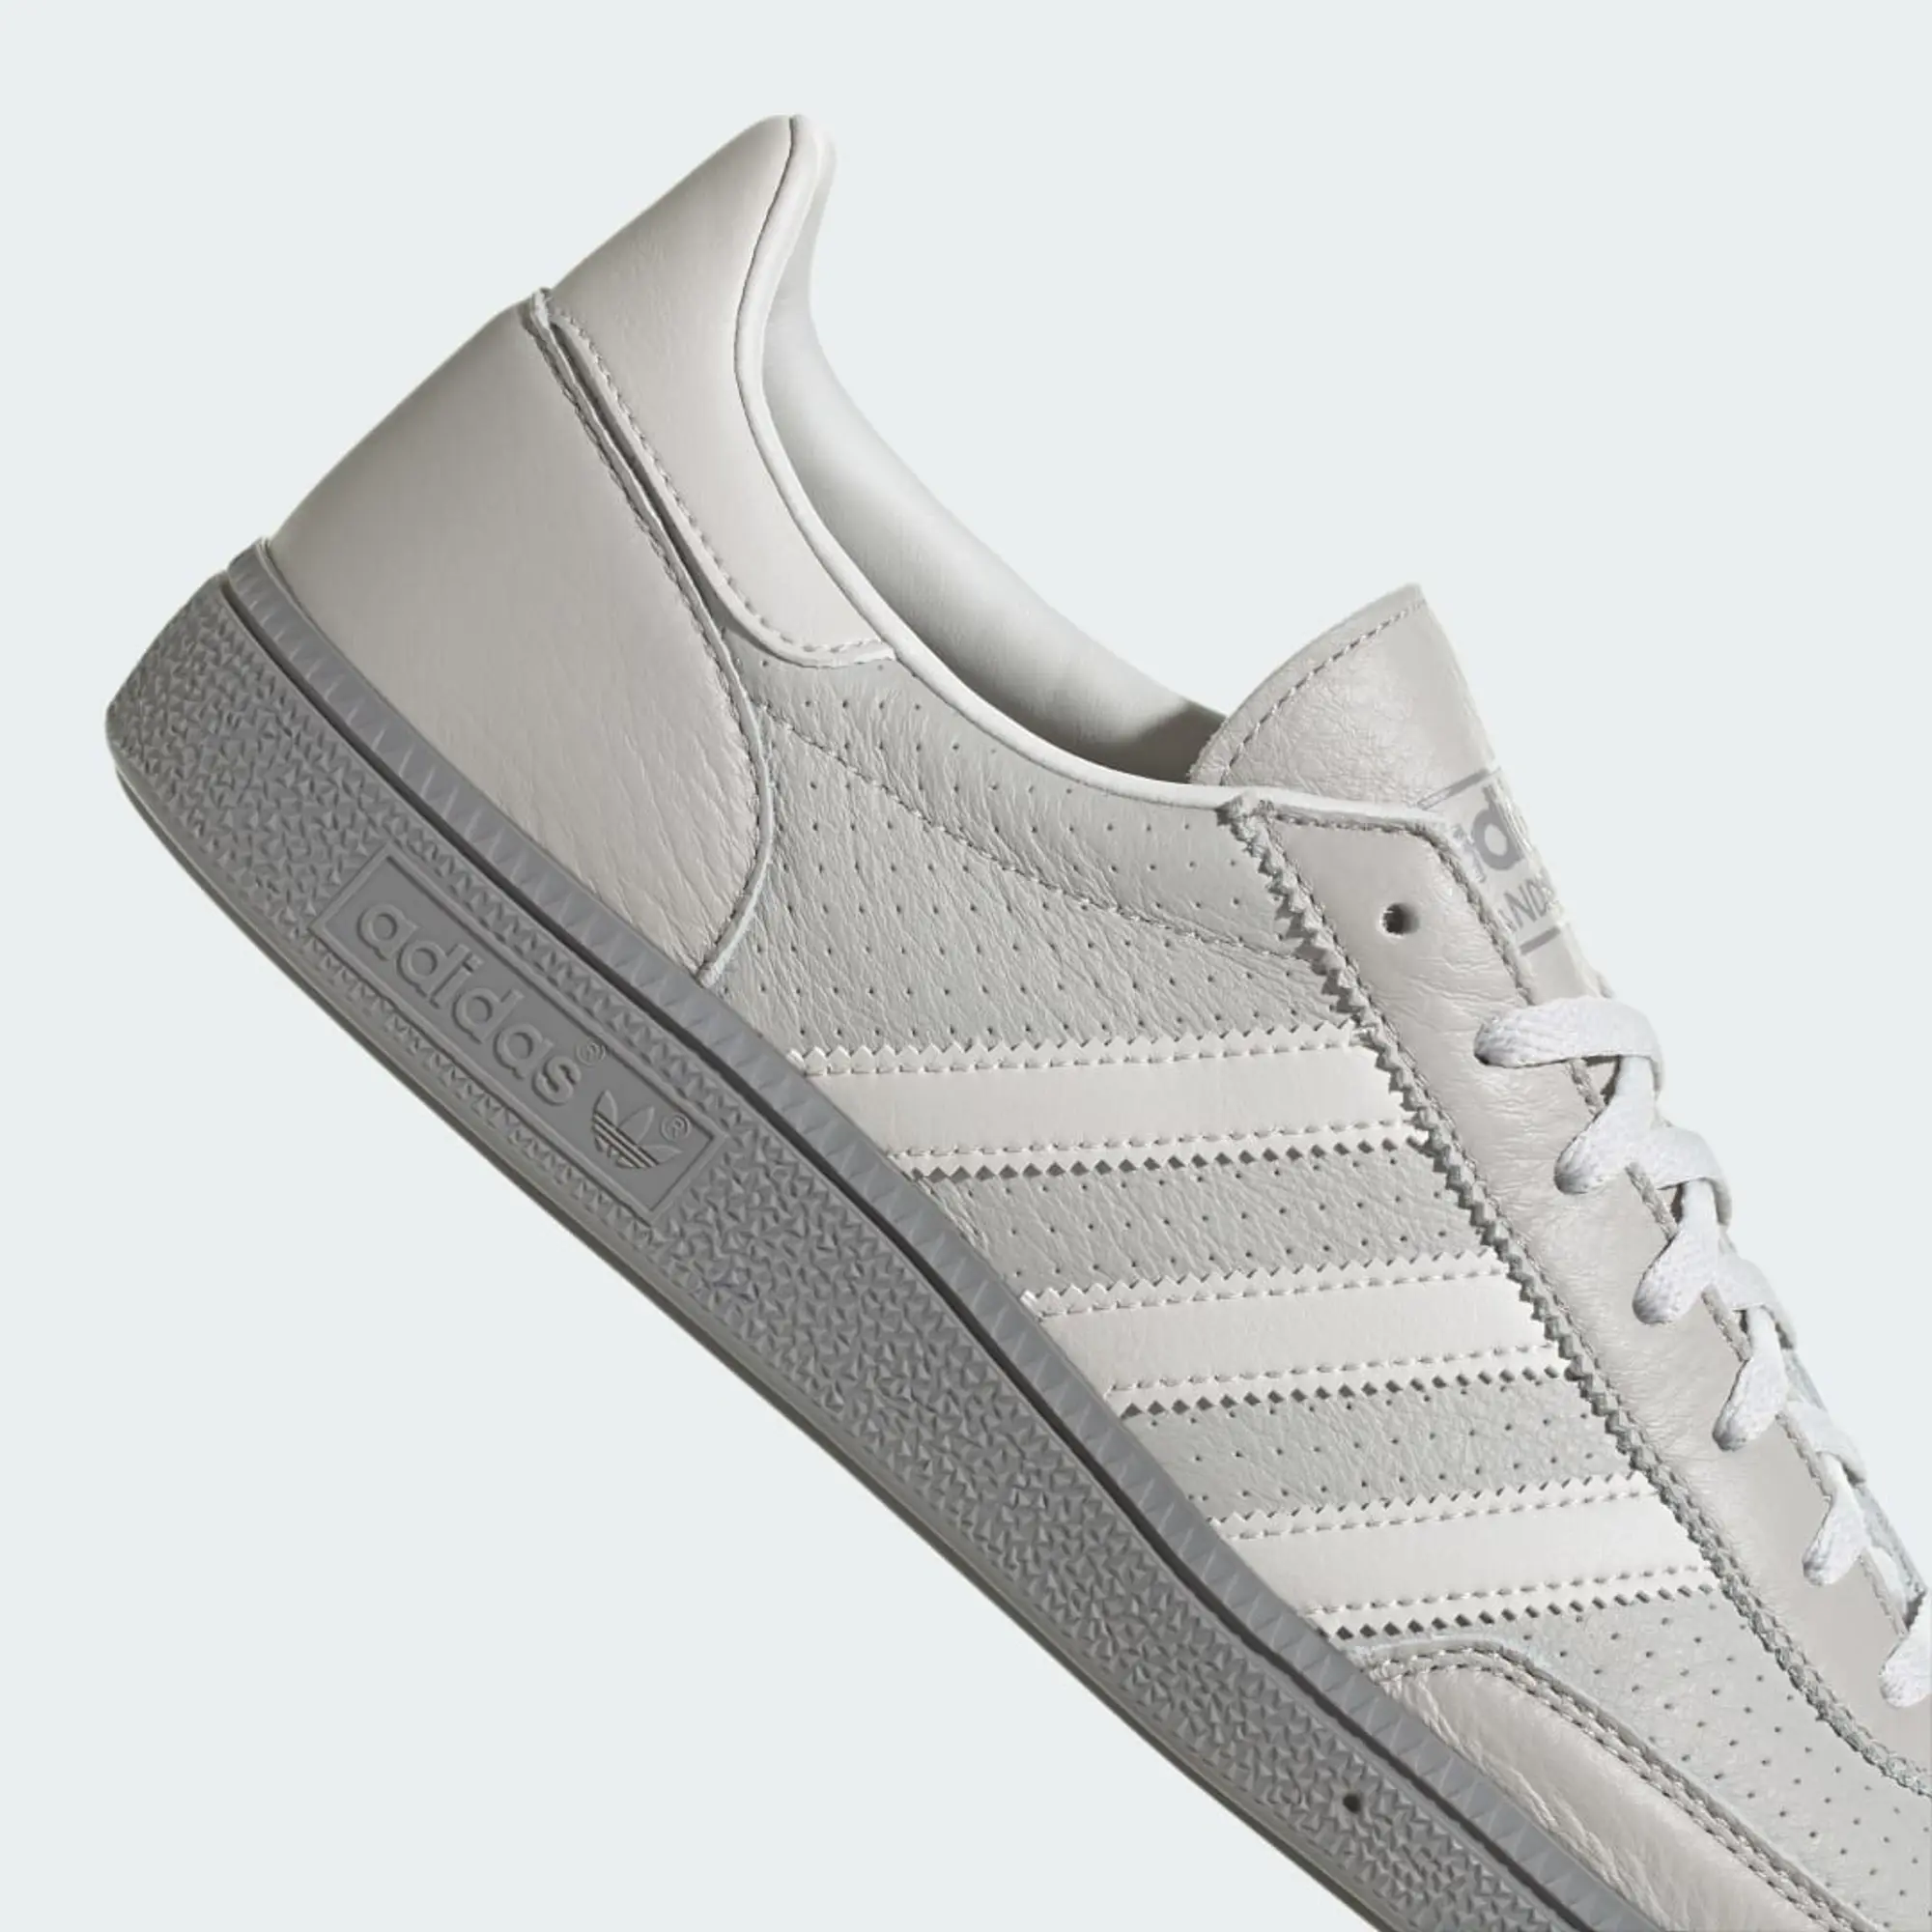 adidas Originals Handball Spezial, Grey